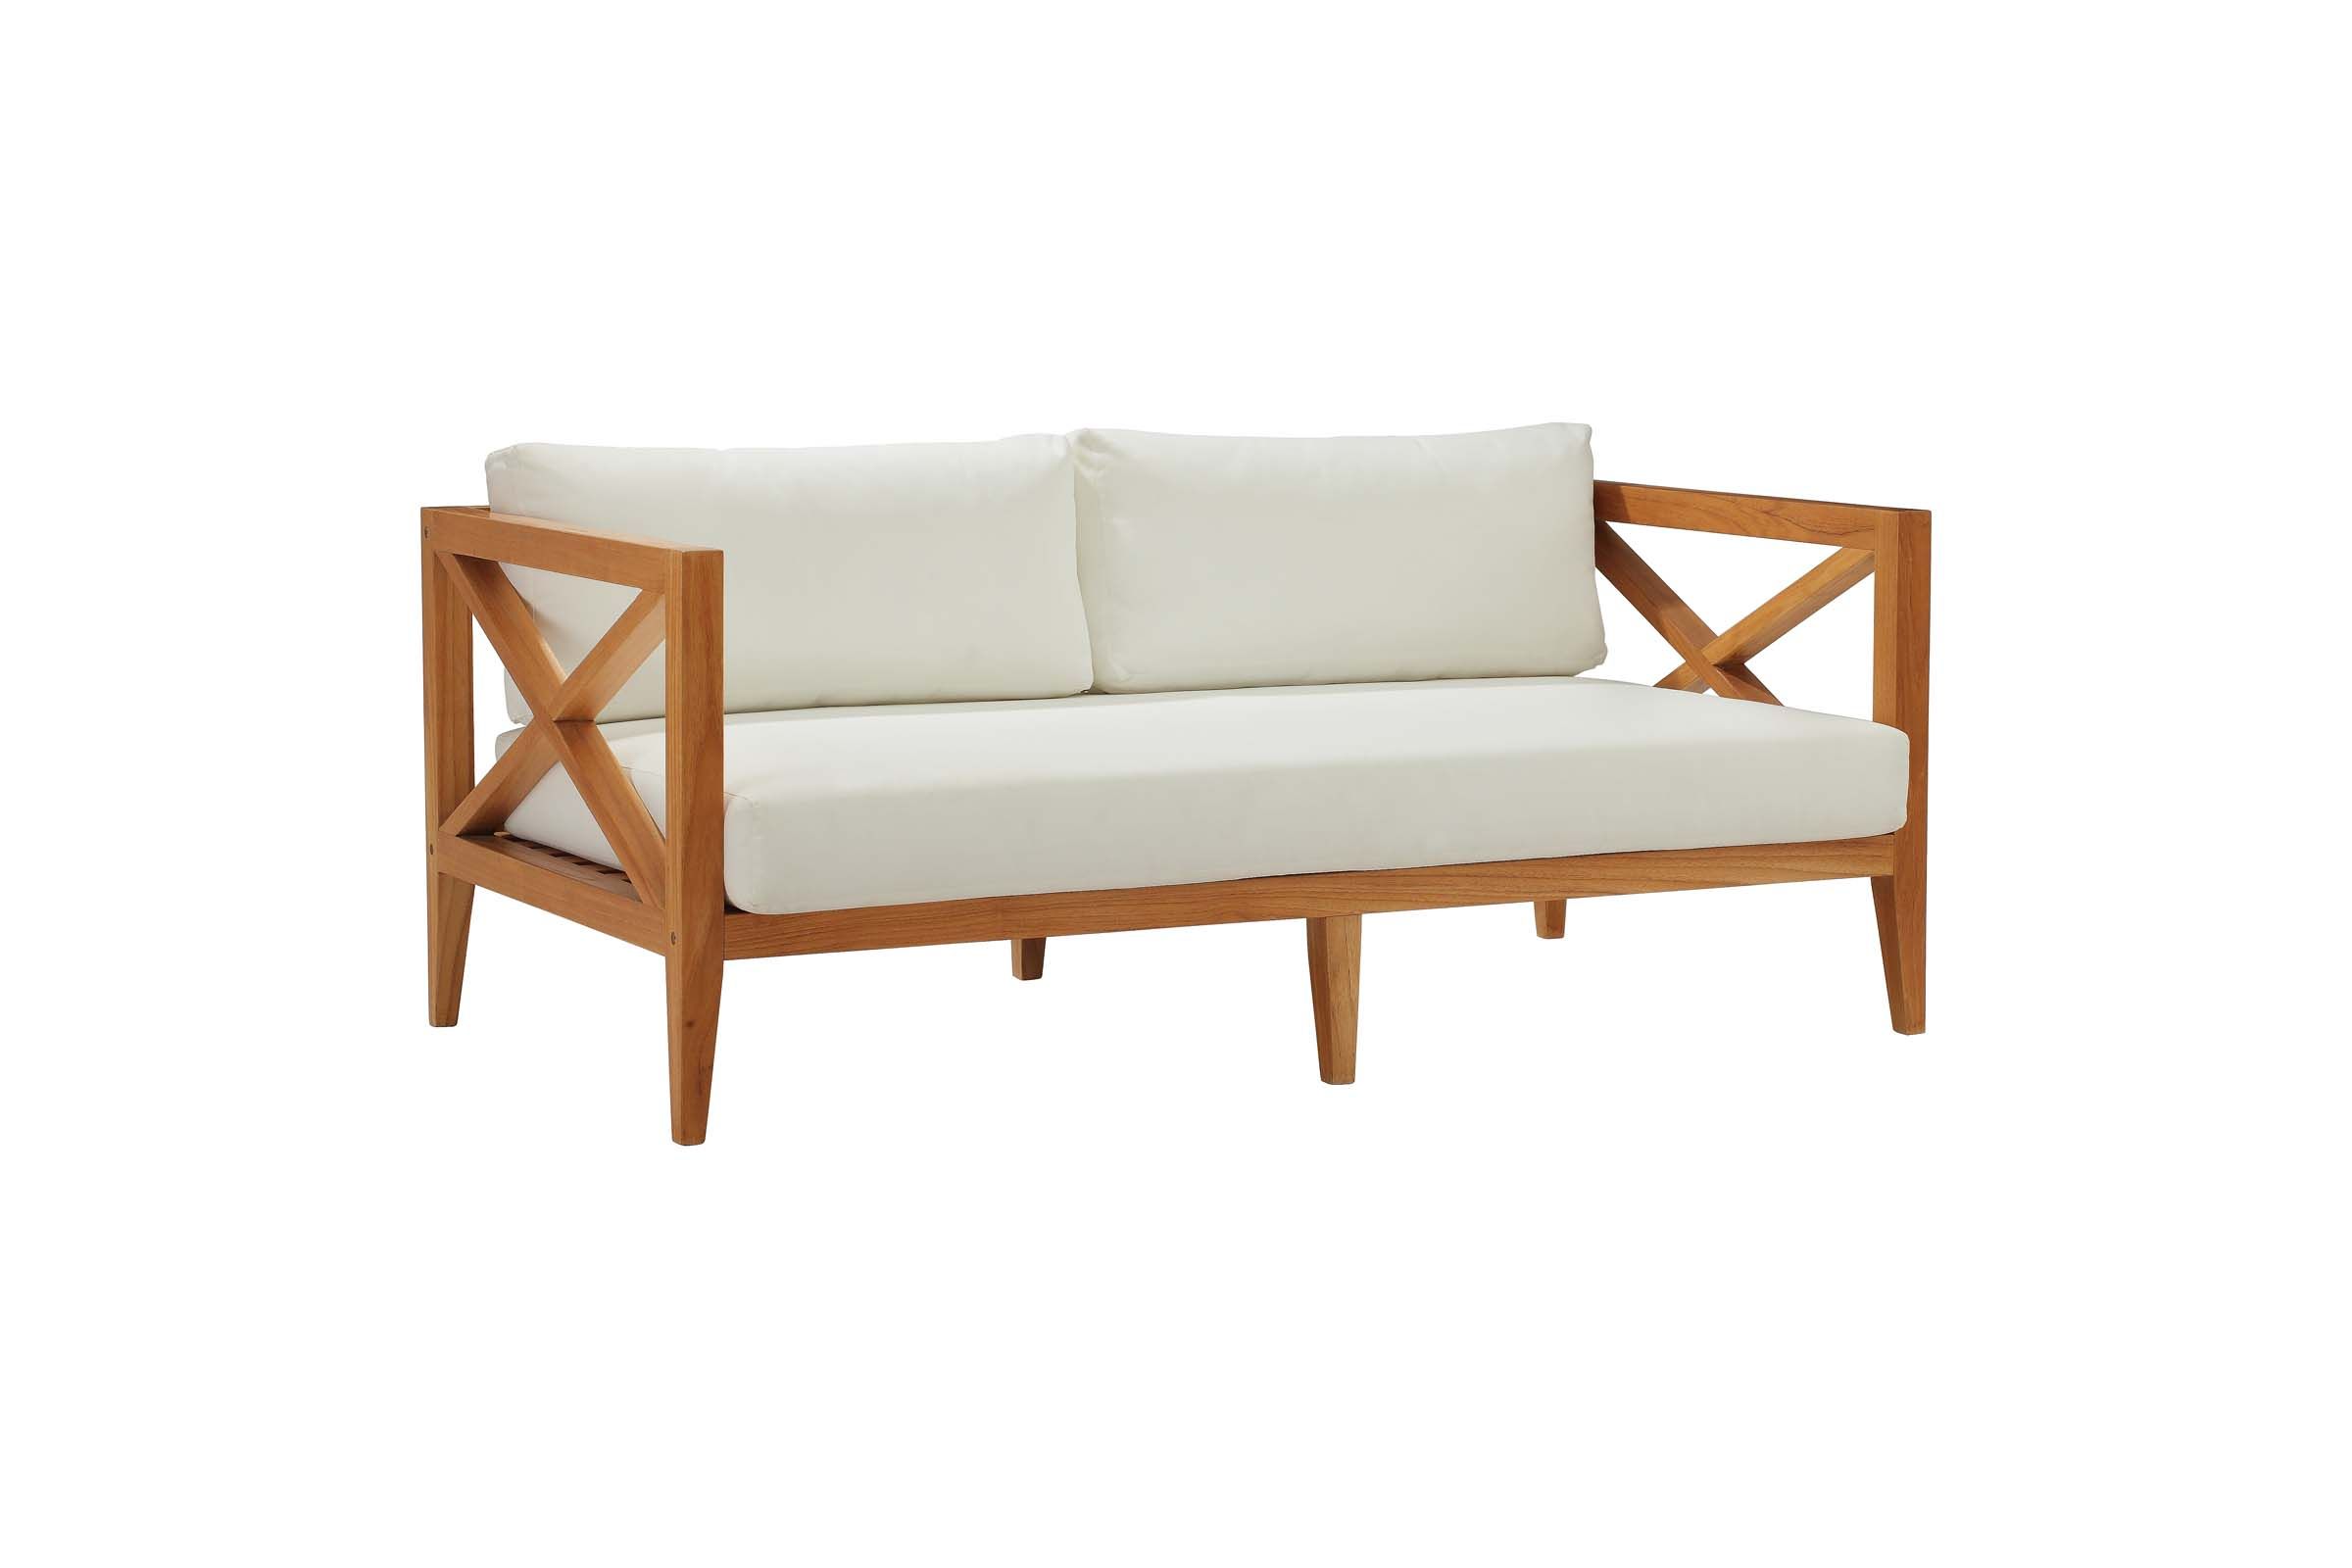 Northlake Outdoor Patio Premium Grade A Teak Wood Sofa in Natural White